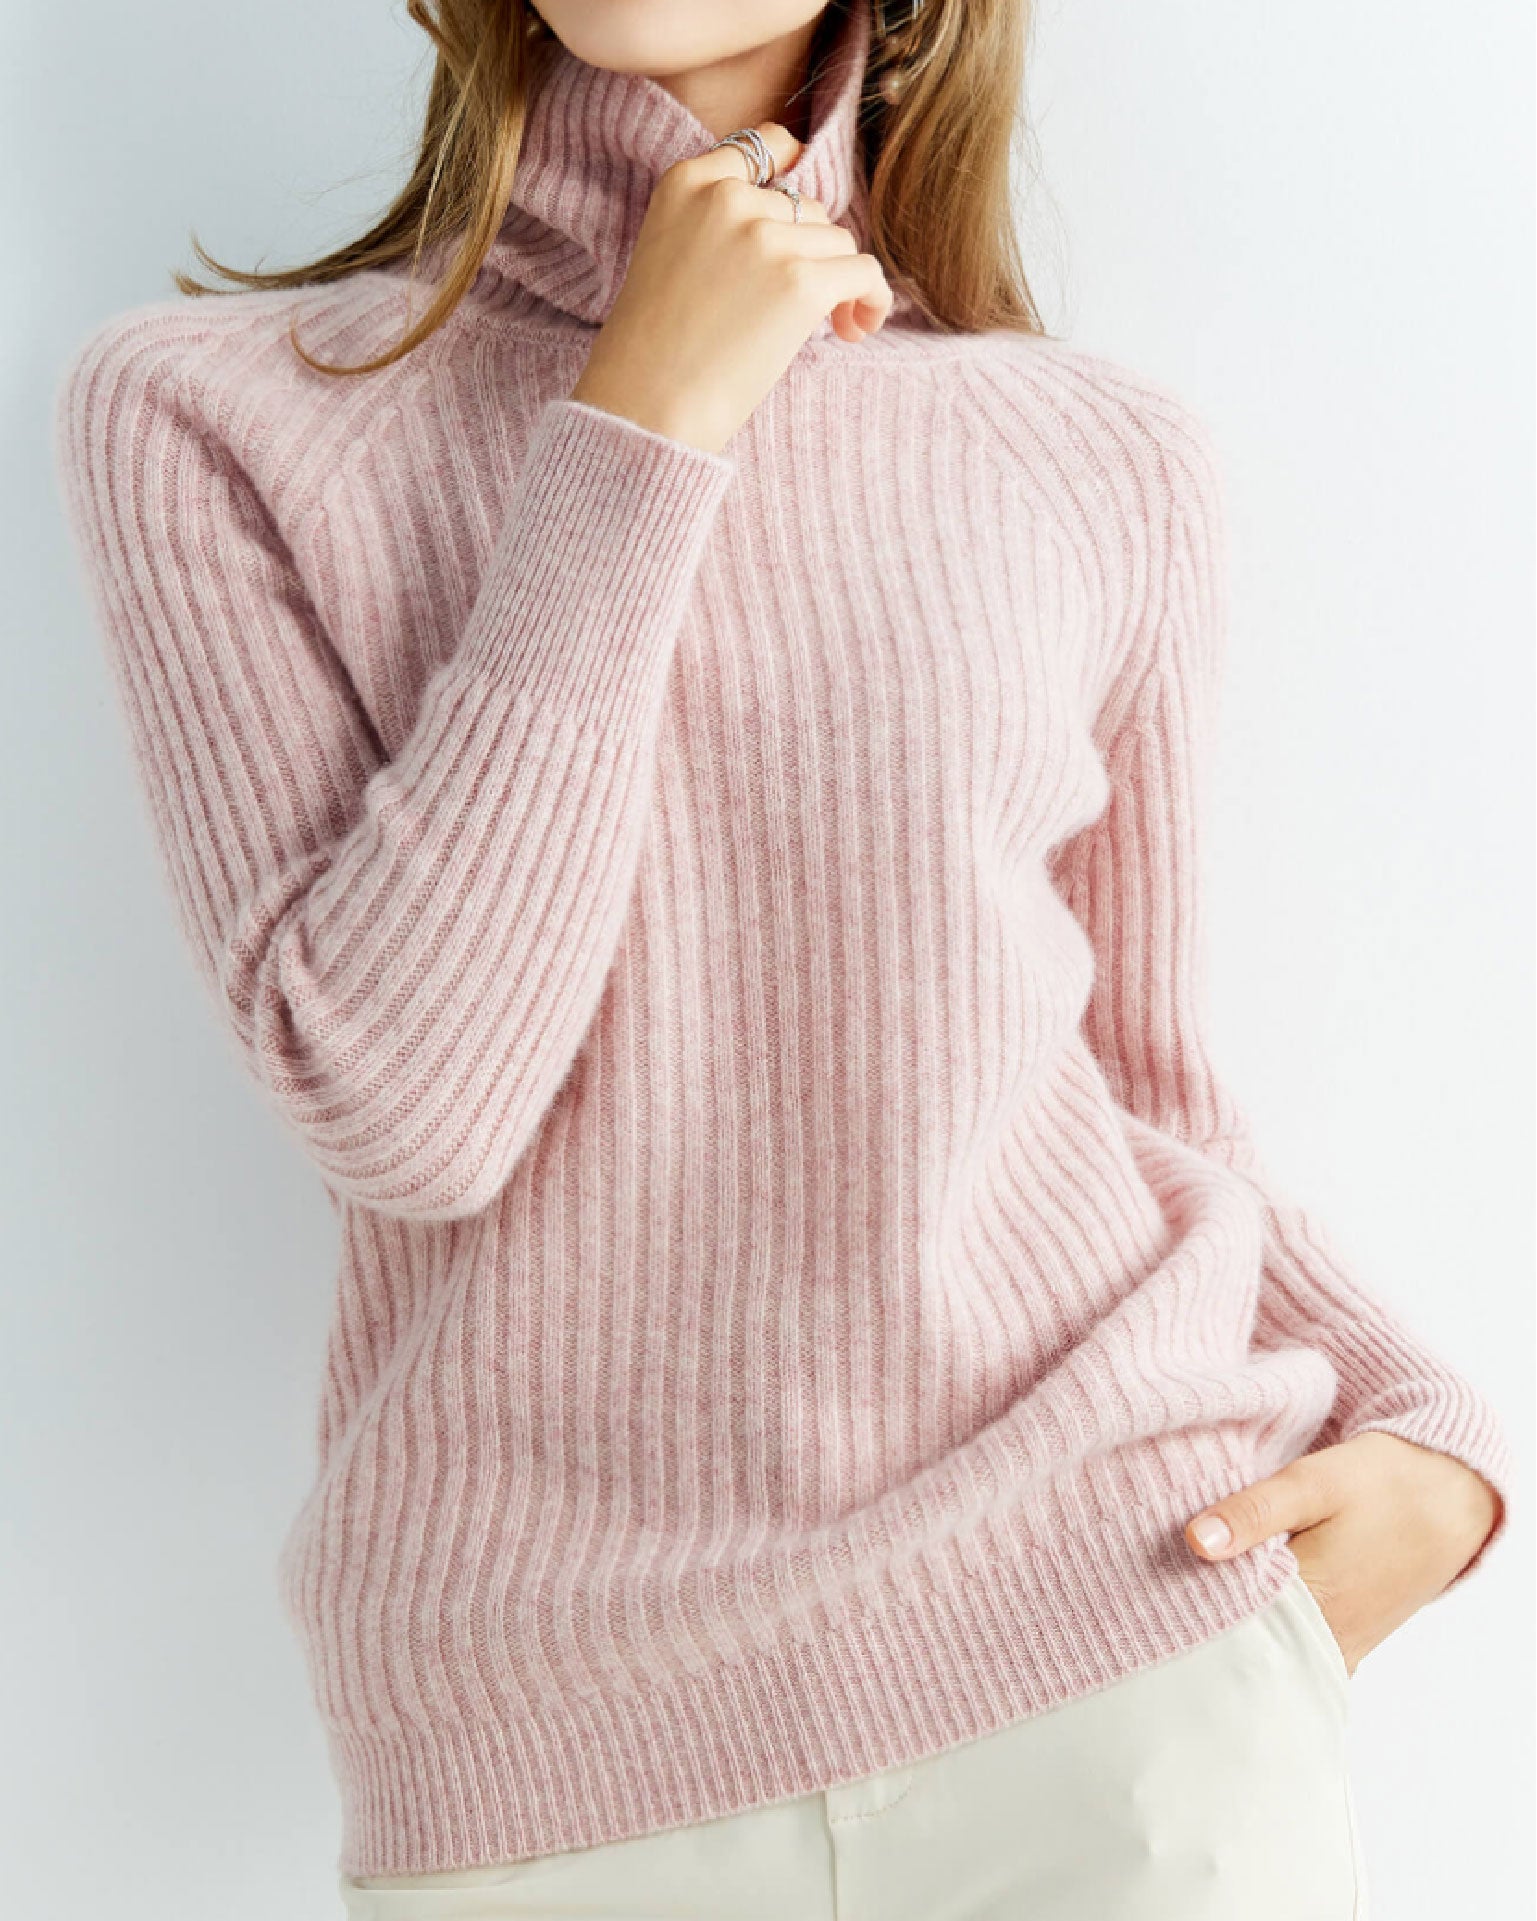 Sweater - Roze